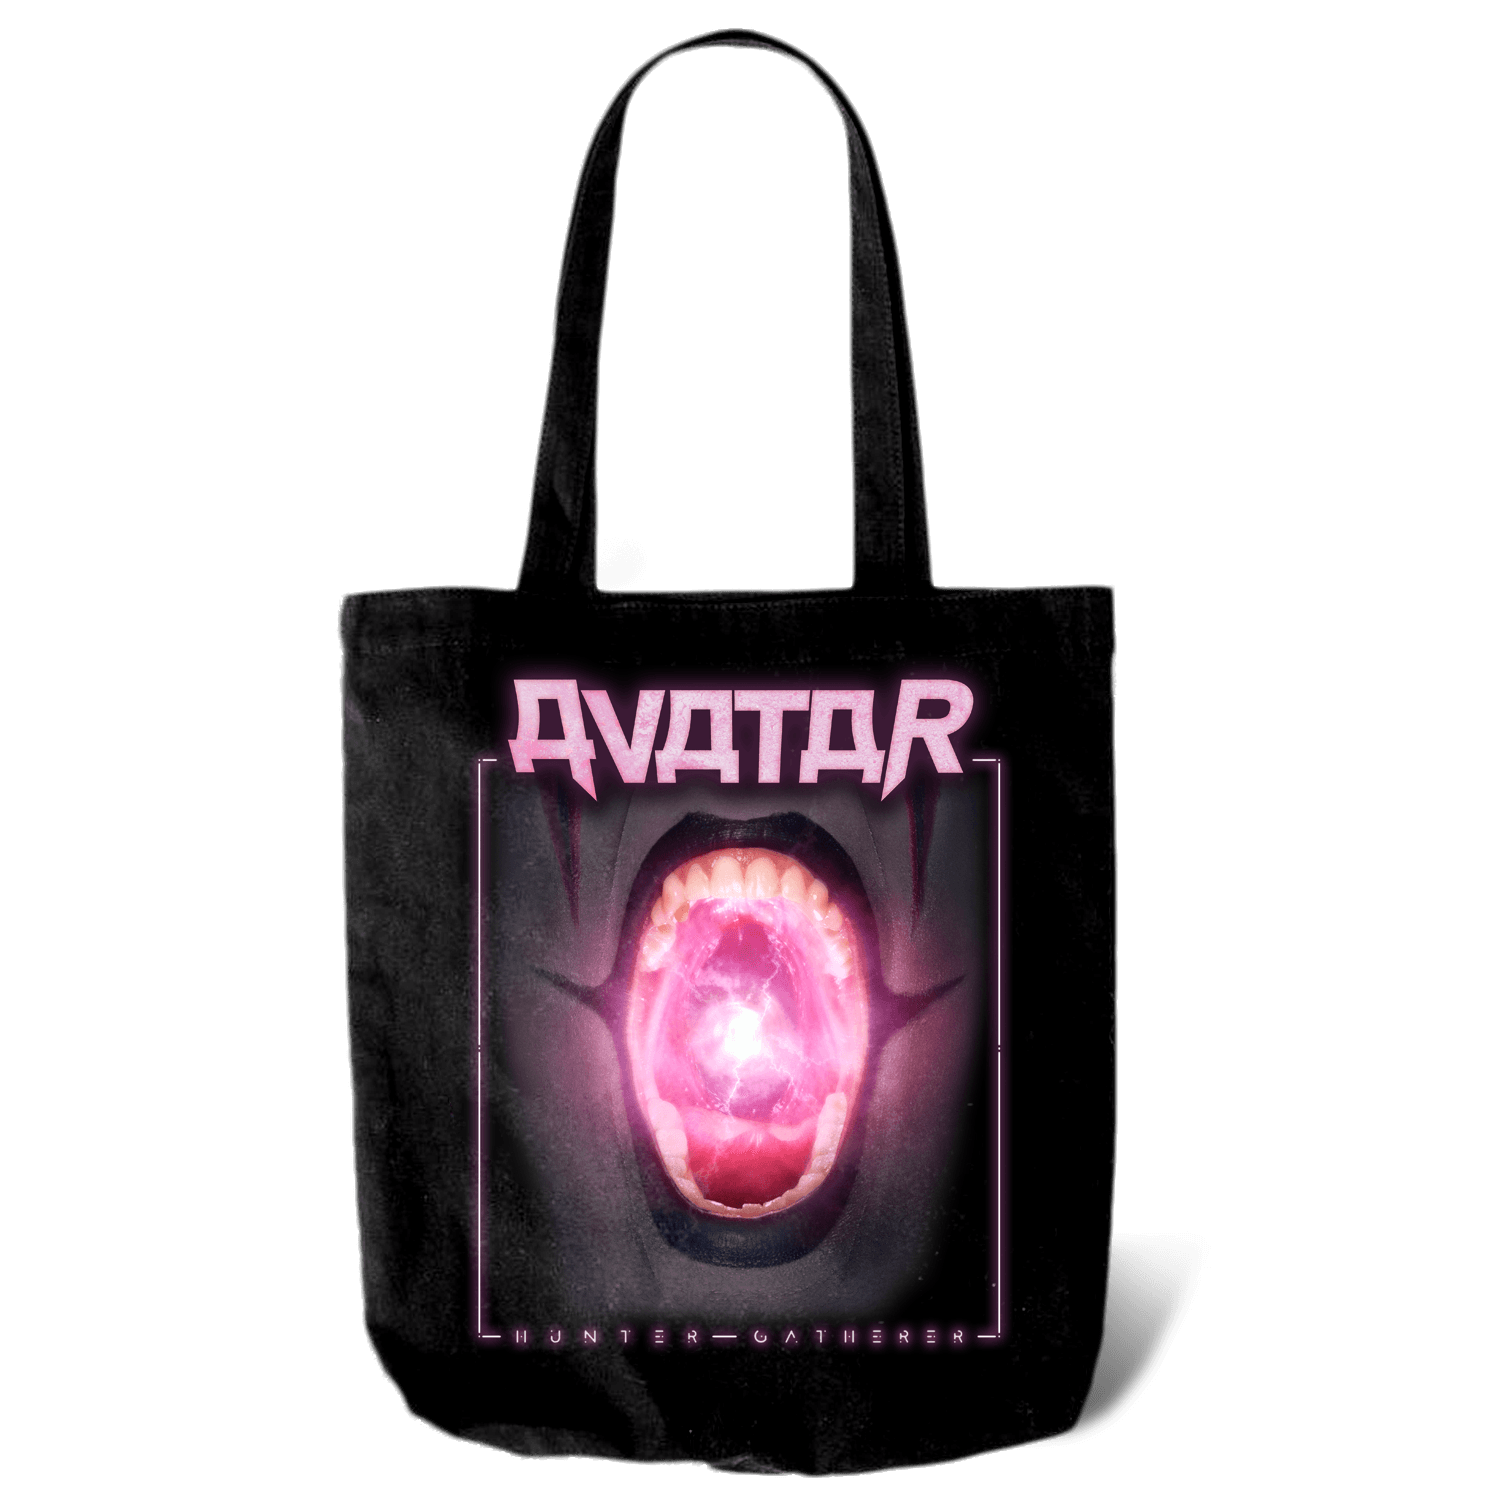 Avatar - "Hunter Gatherer" Tote Bag - MNRK Heavy